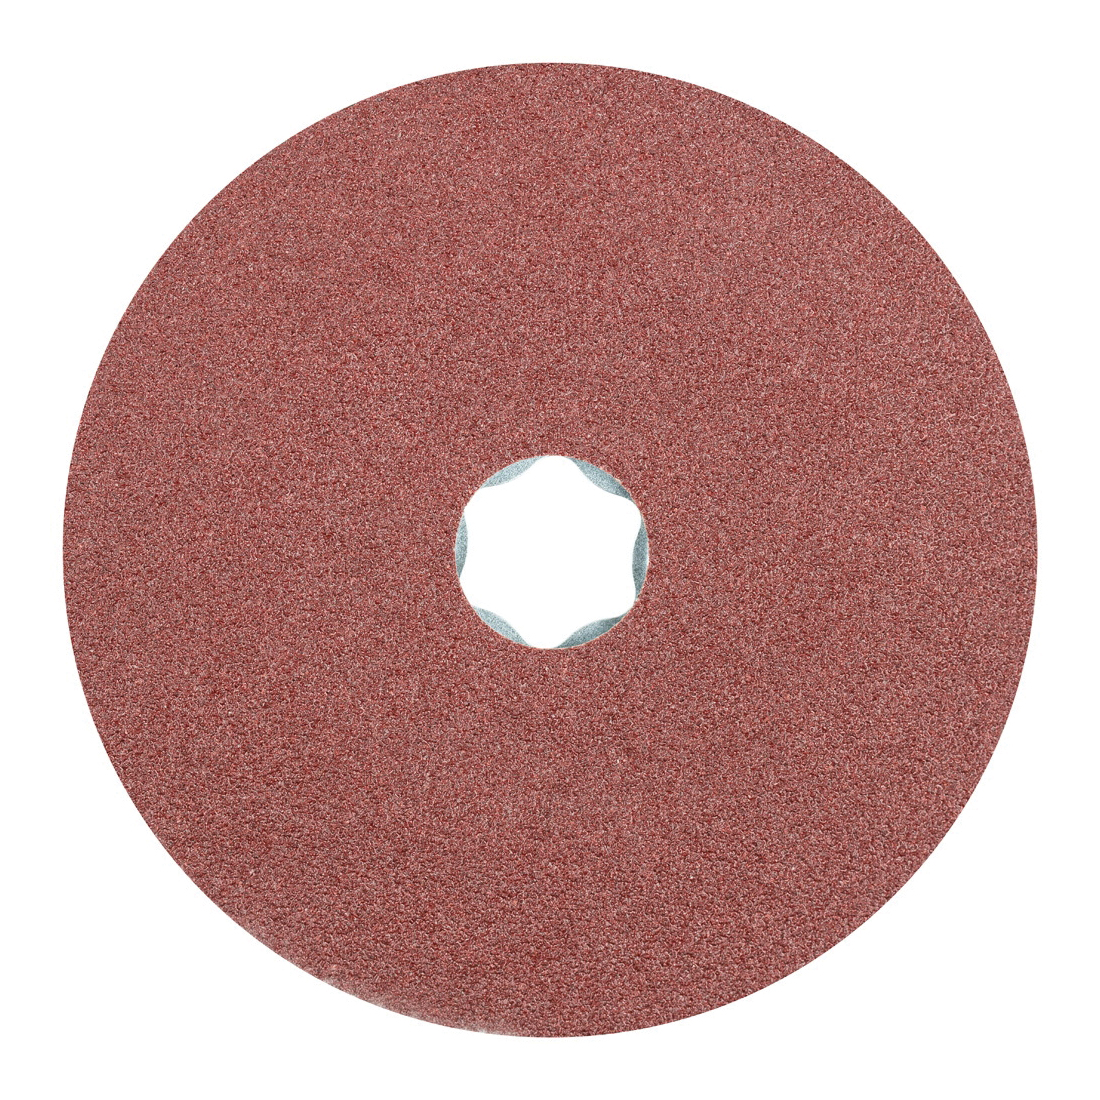 PFERD COMBICLICK® 40094 Coated Abrasive Disc, 4-1/2 in Dia, 60 Grit, Aluminum Oxide Abrasive